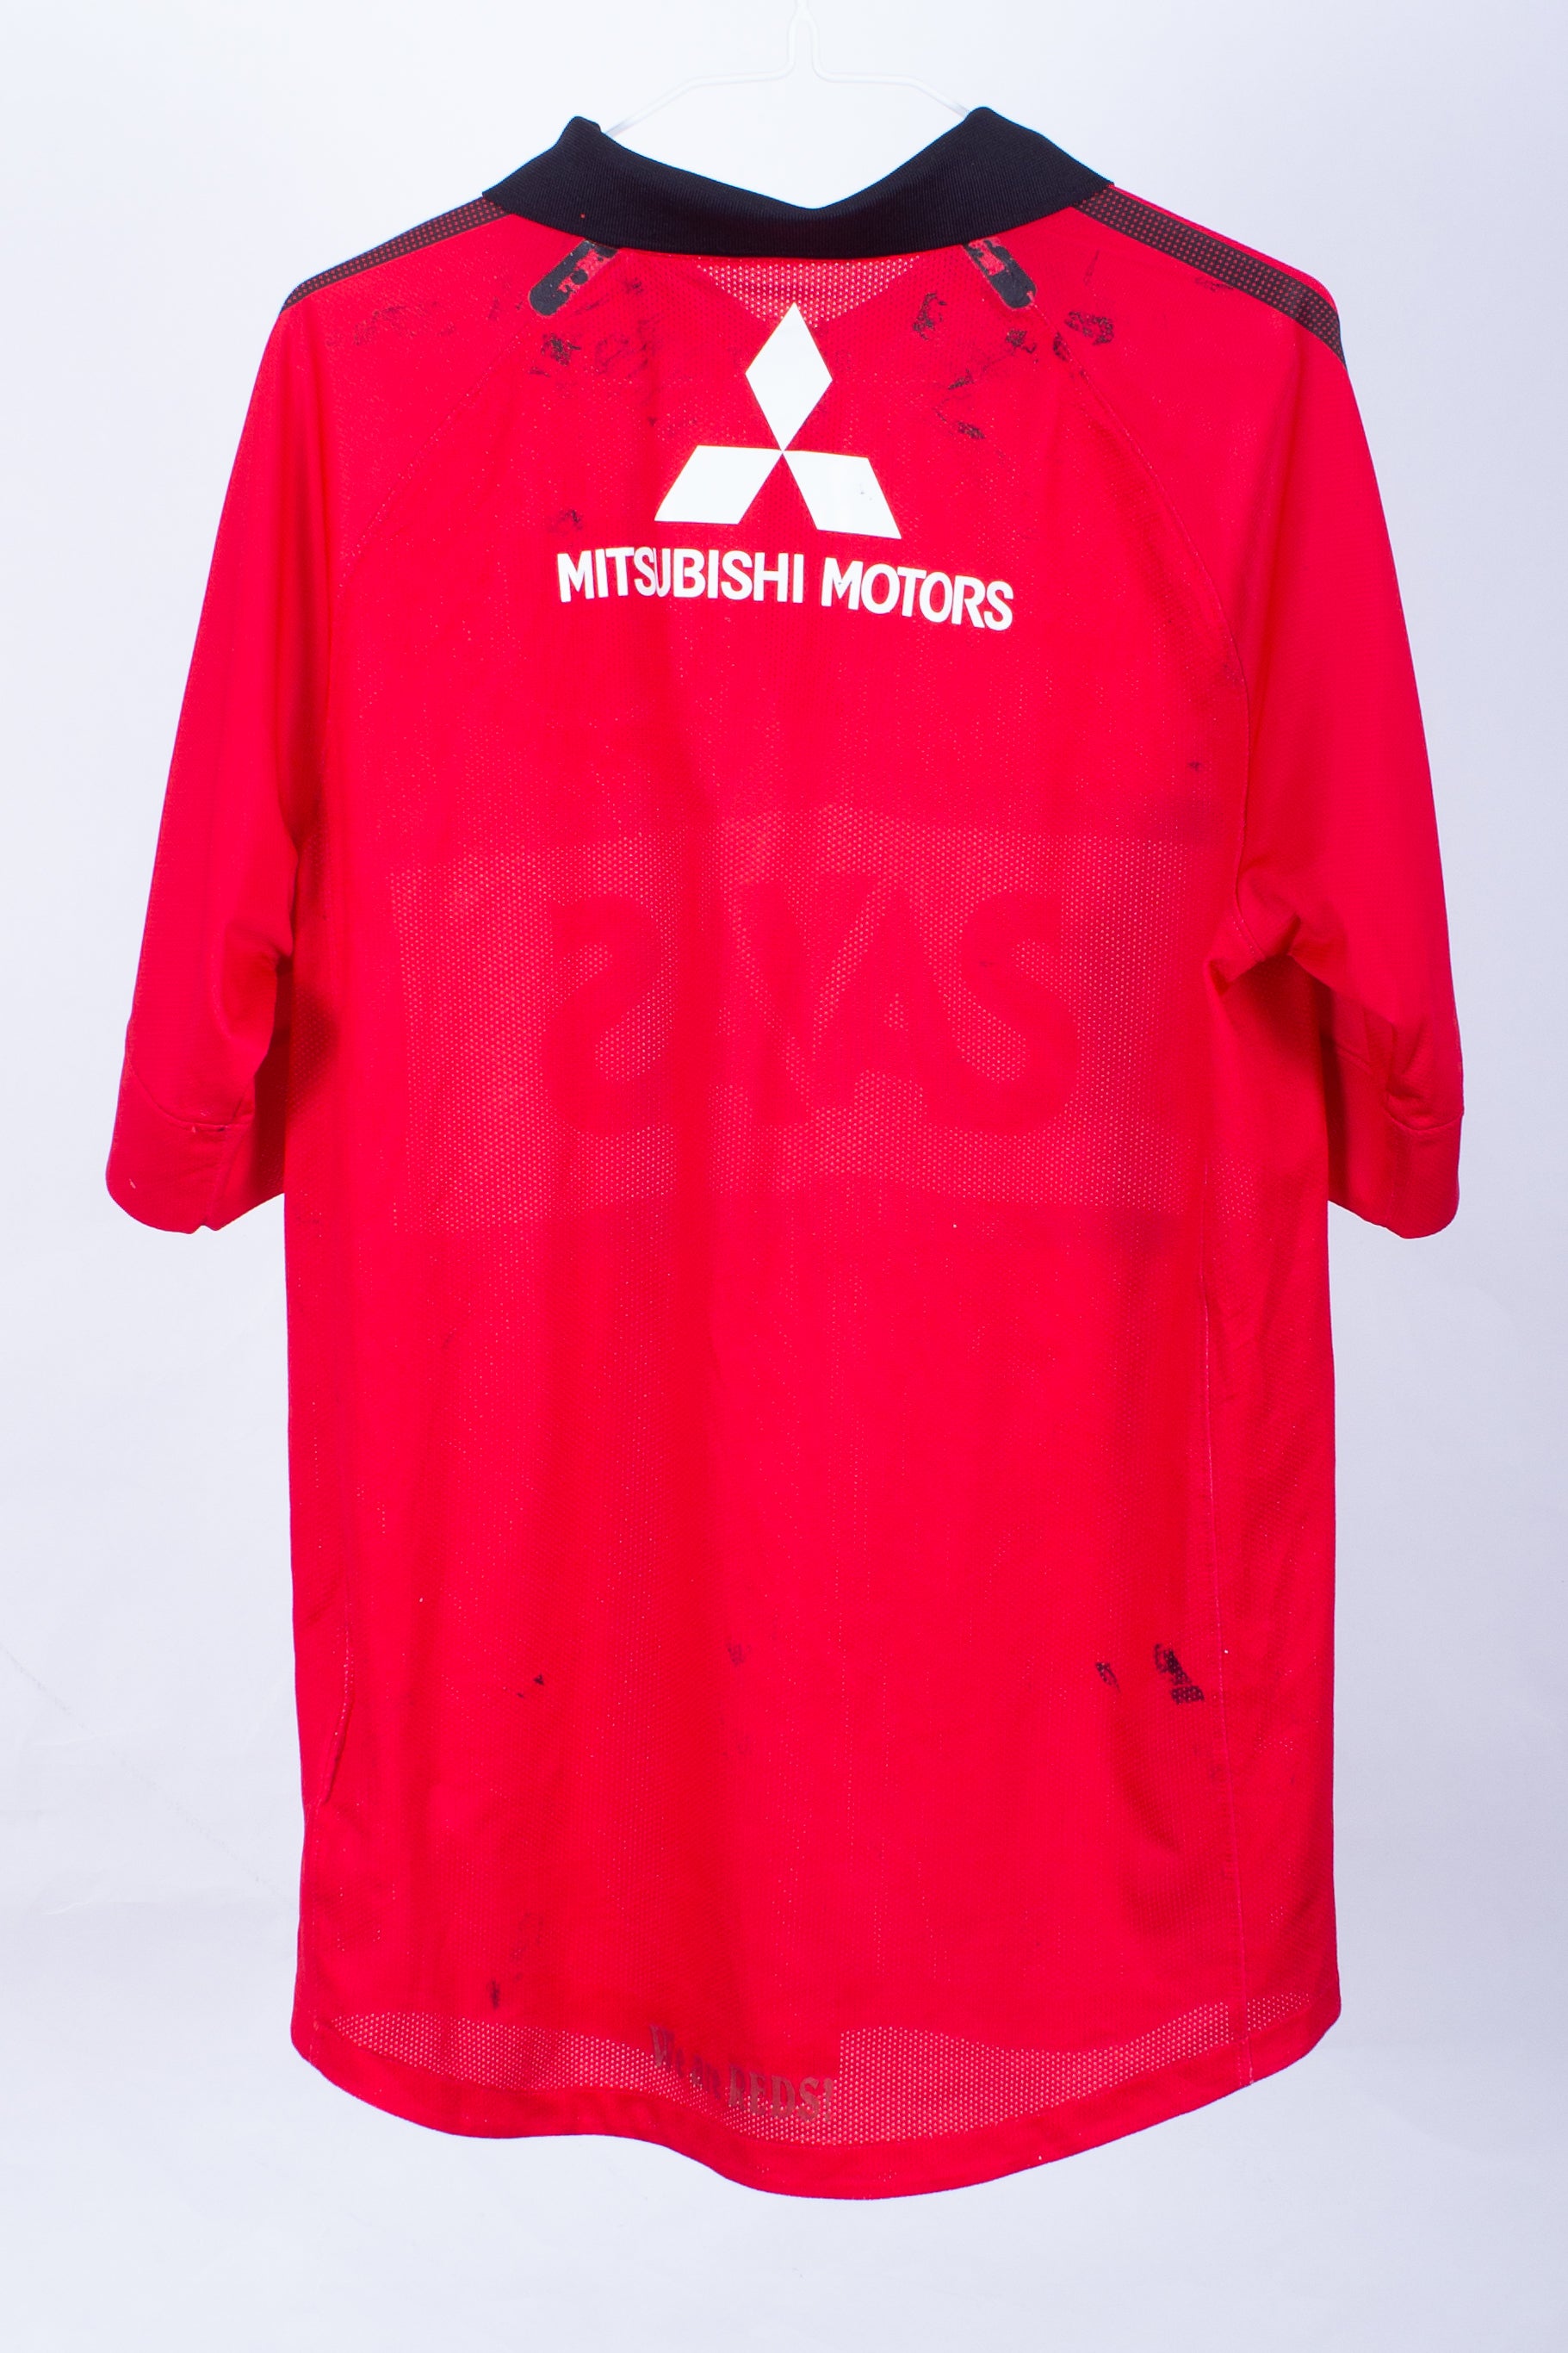 Urawa Red Diamonds Football Shirt, Vintage Urawa Red Diamonds Football Shirt, That Vintage Football Shirt